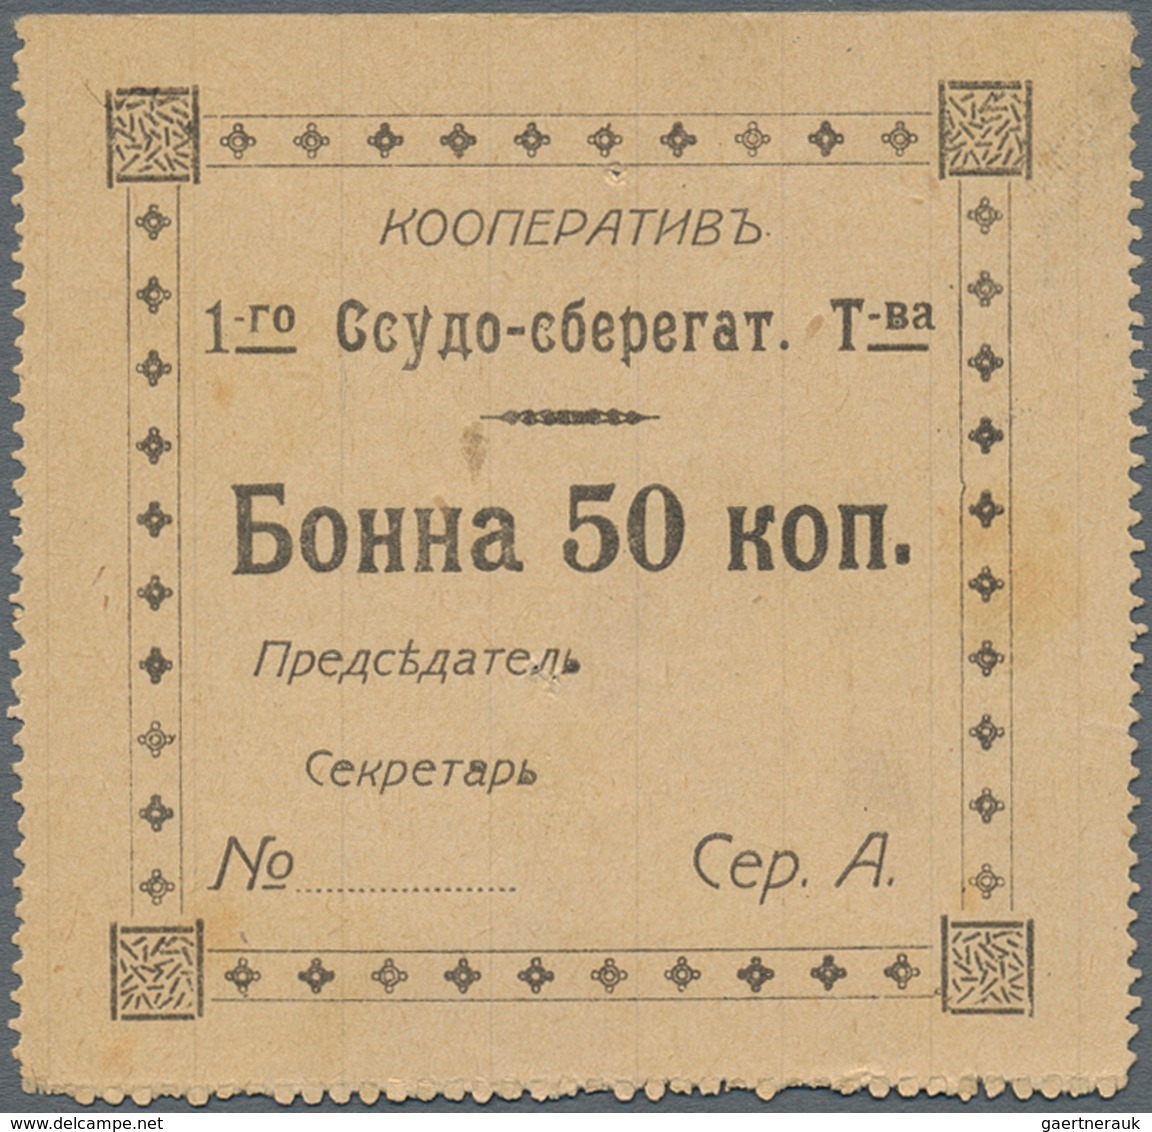 Ukraina / Ukraine: Voucher For 50 Kopeks ND(ca. 1920) Remainder With Series A, P.NL (R 17295), Tiny - Ukraine